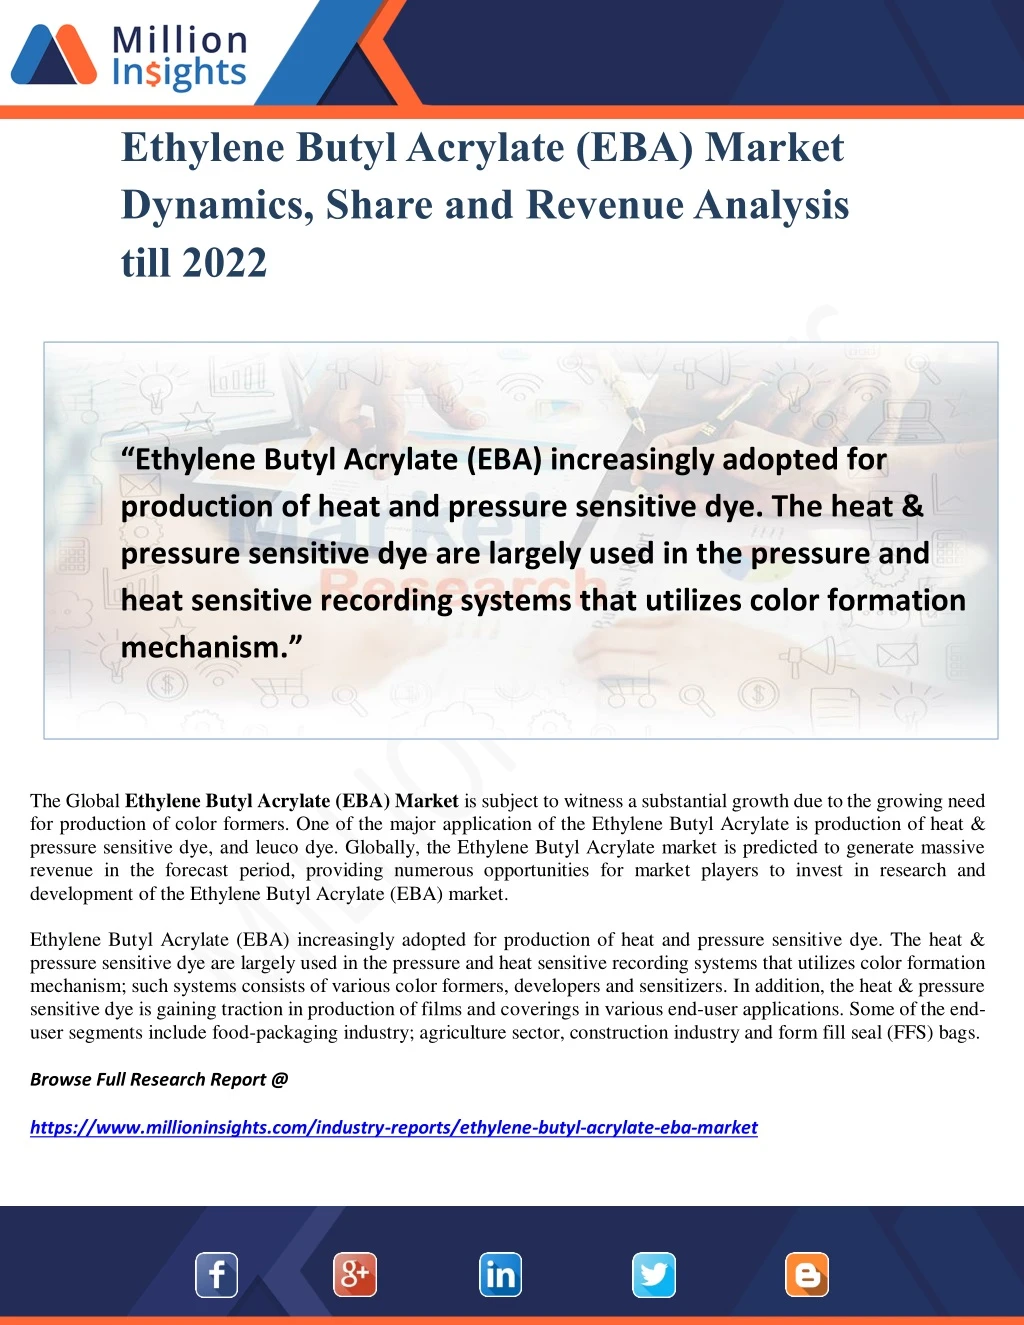 ethylene butyl acrylate eba market dynamics share